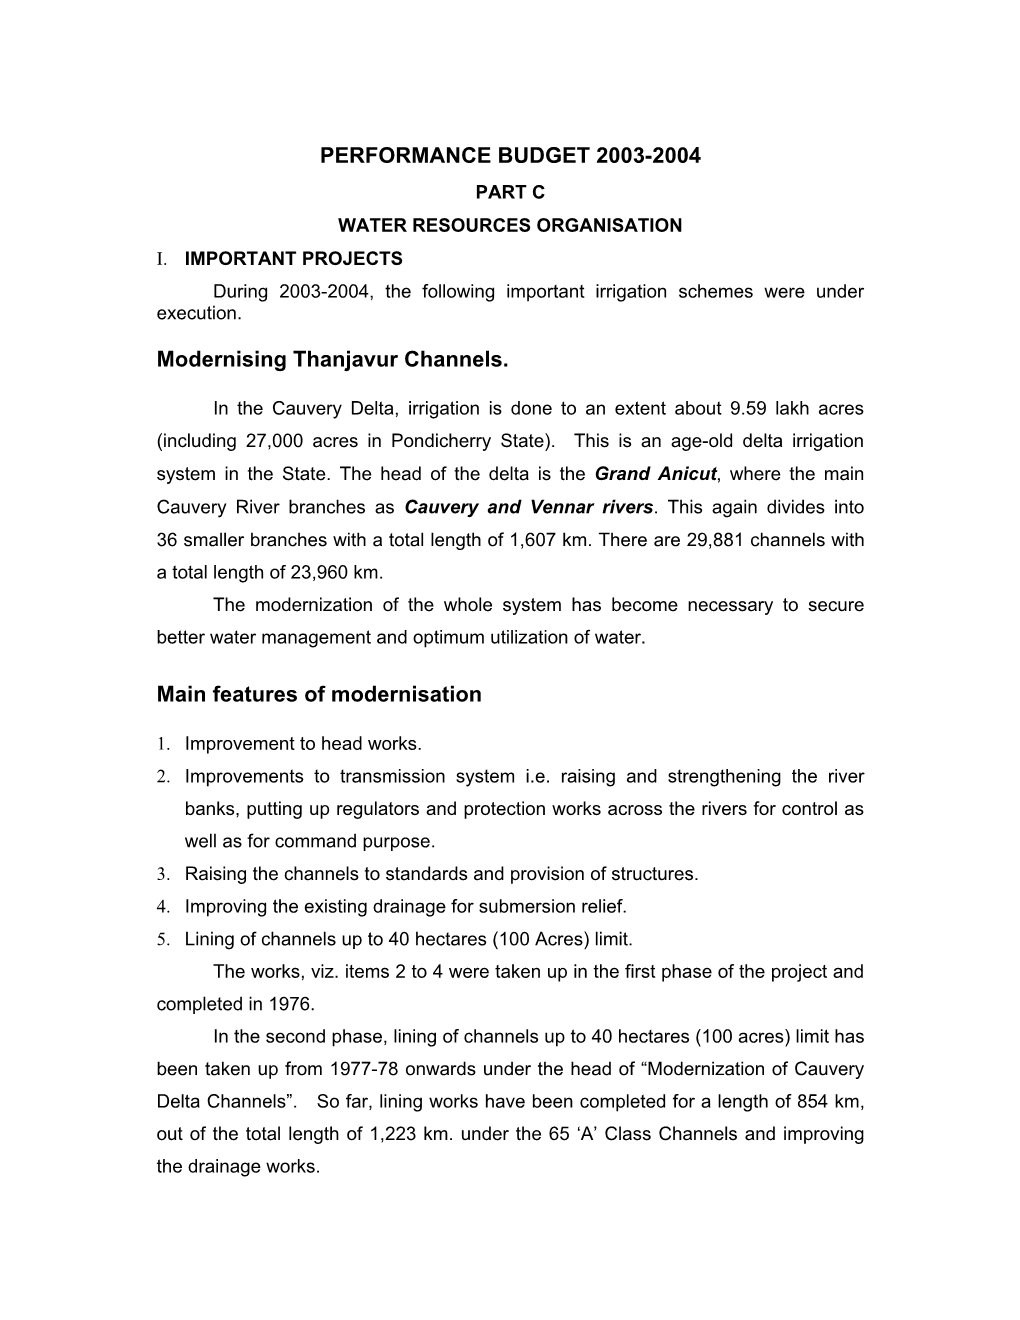 PERFORMANCE BUDGET 2003-2004 Modernising Thanjavur